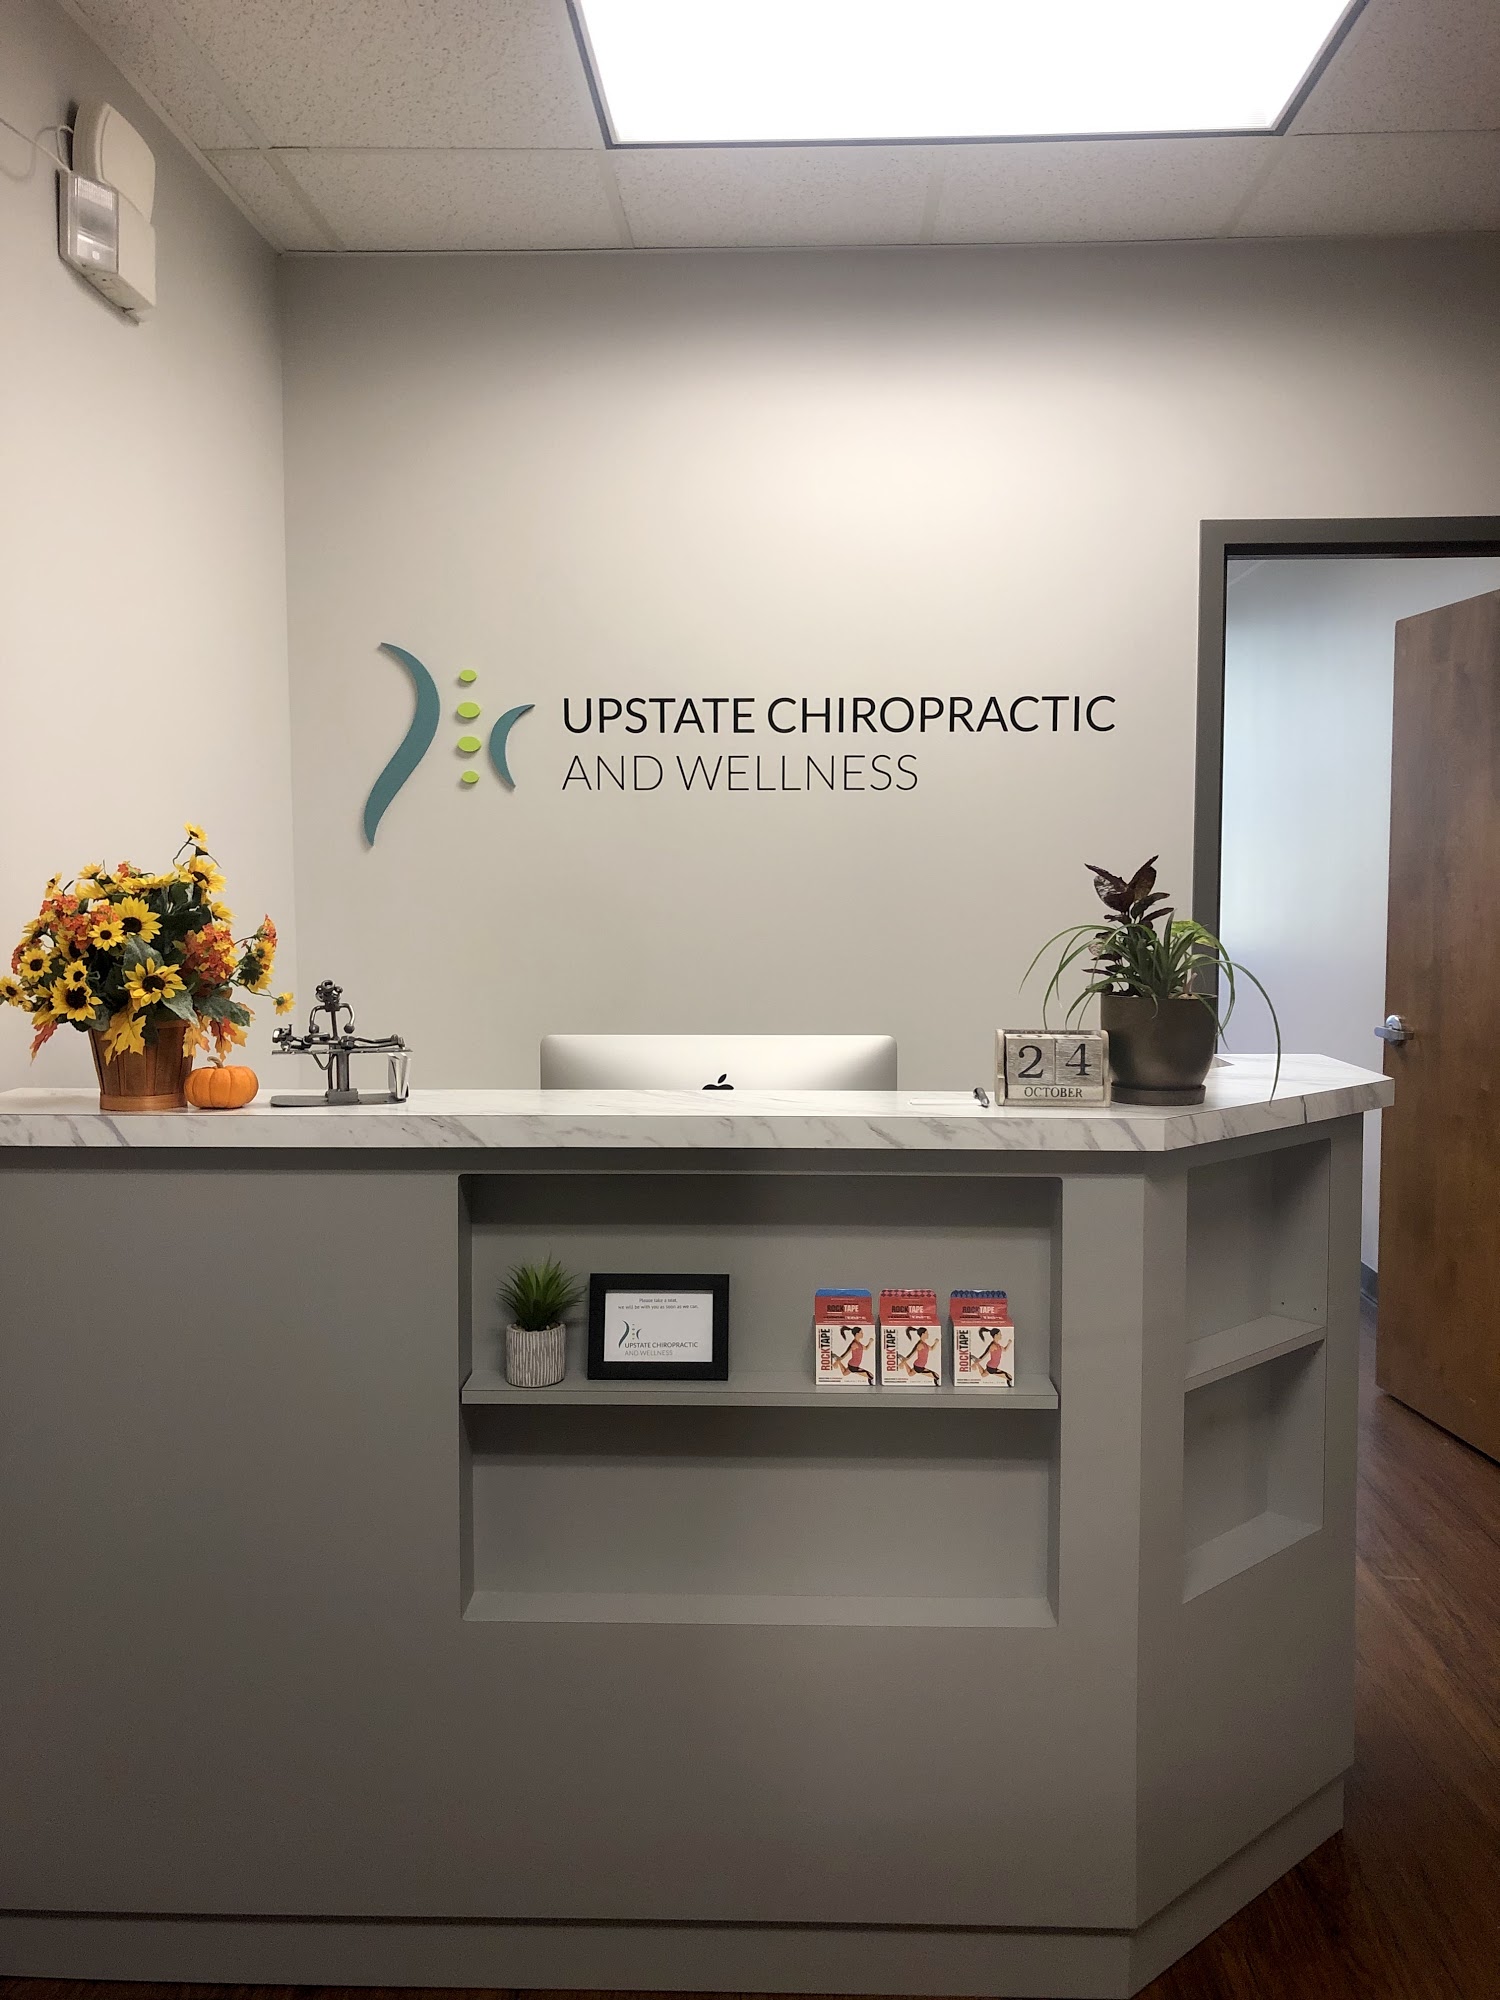 Upstate Chiropractic and Wellness